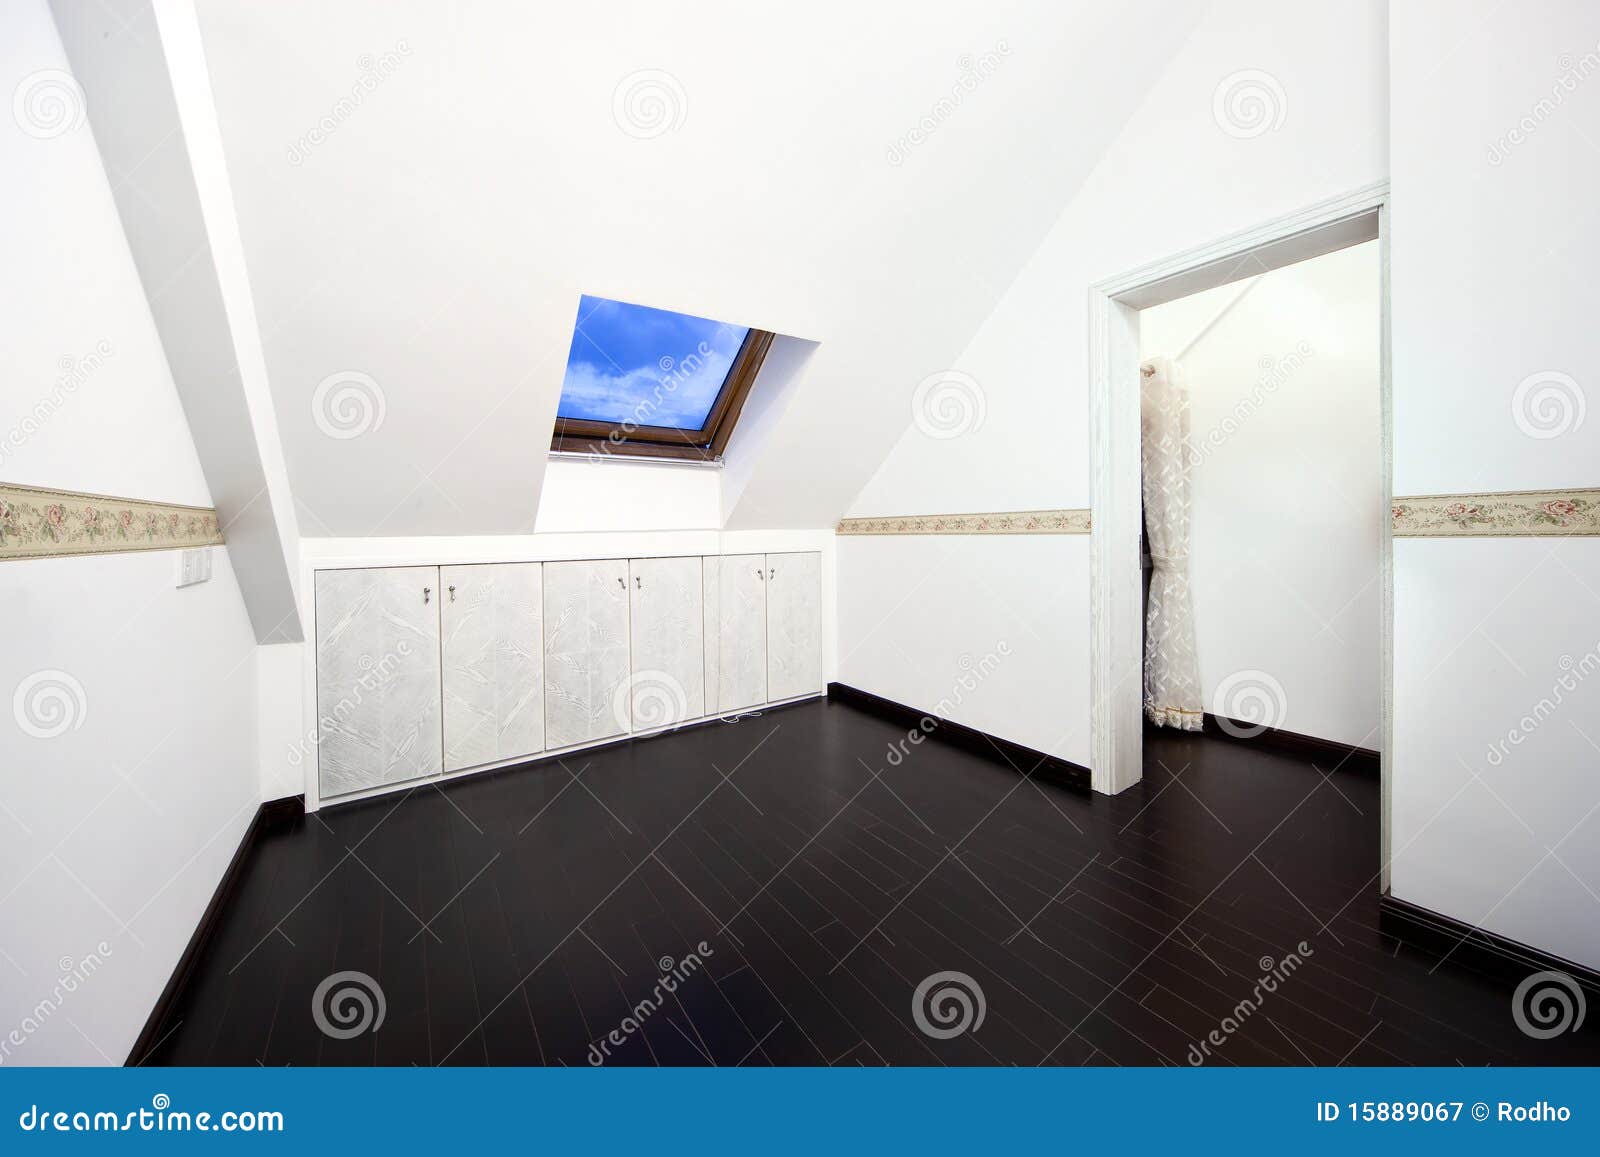 attic room with roof skylight window